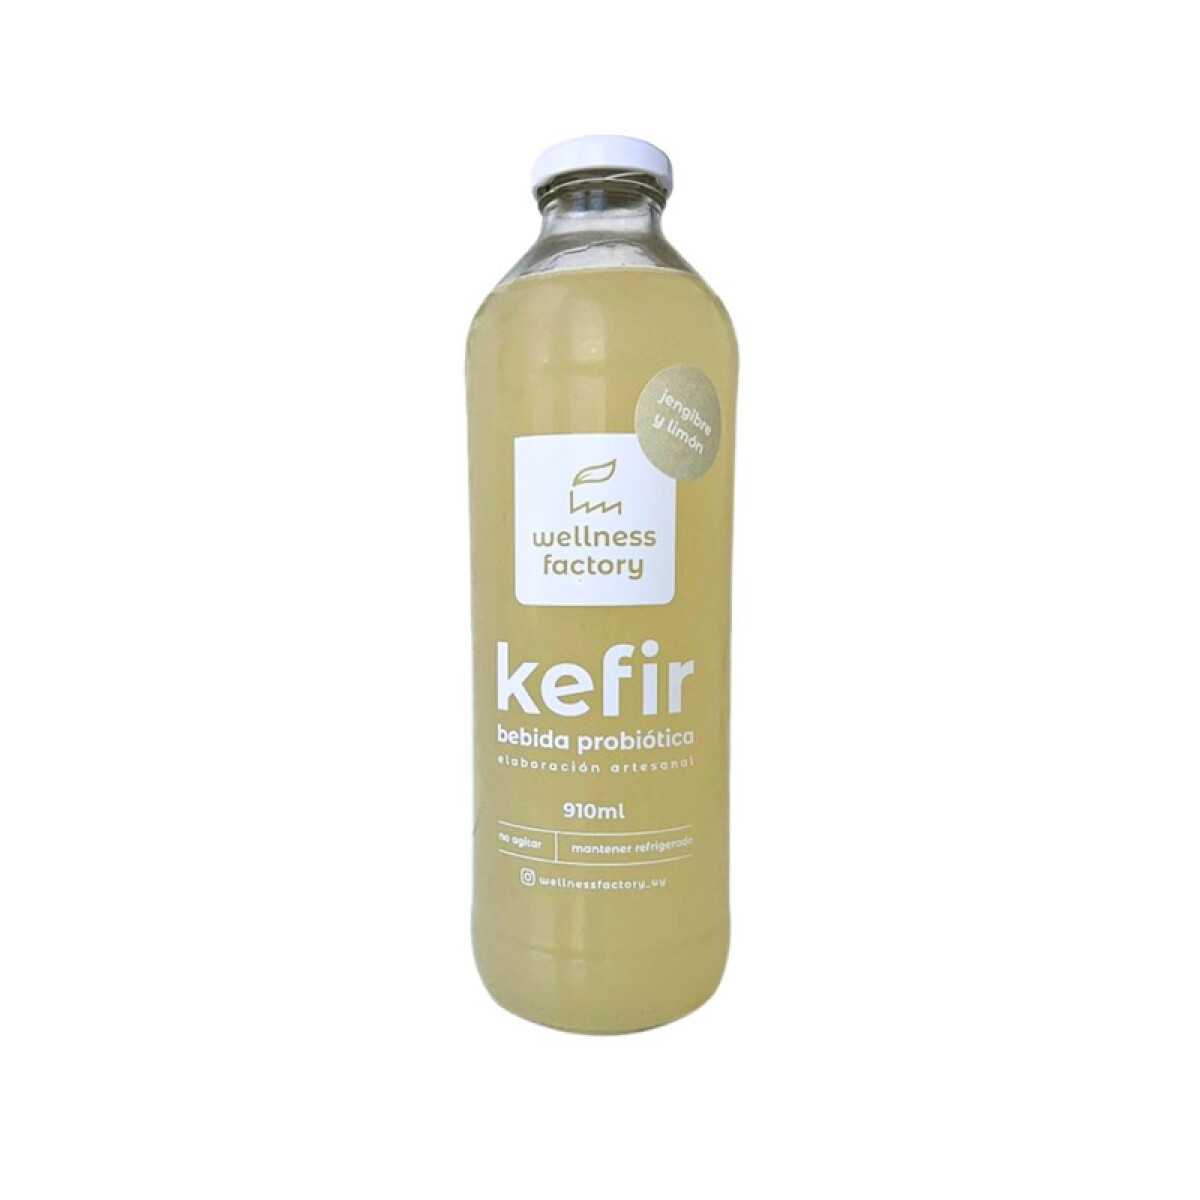 Agua de Kefir limon y jengibre 910ml 